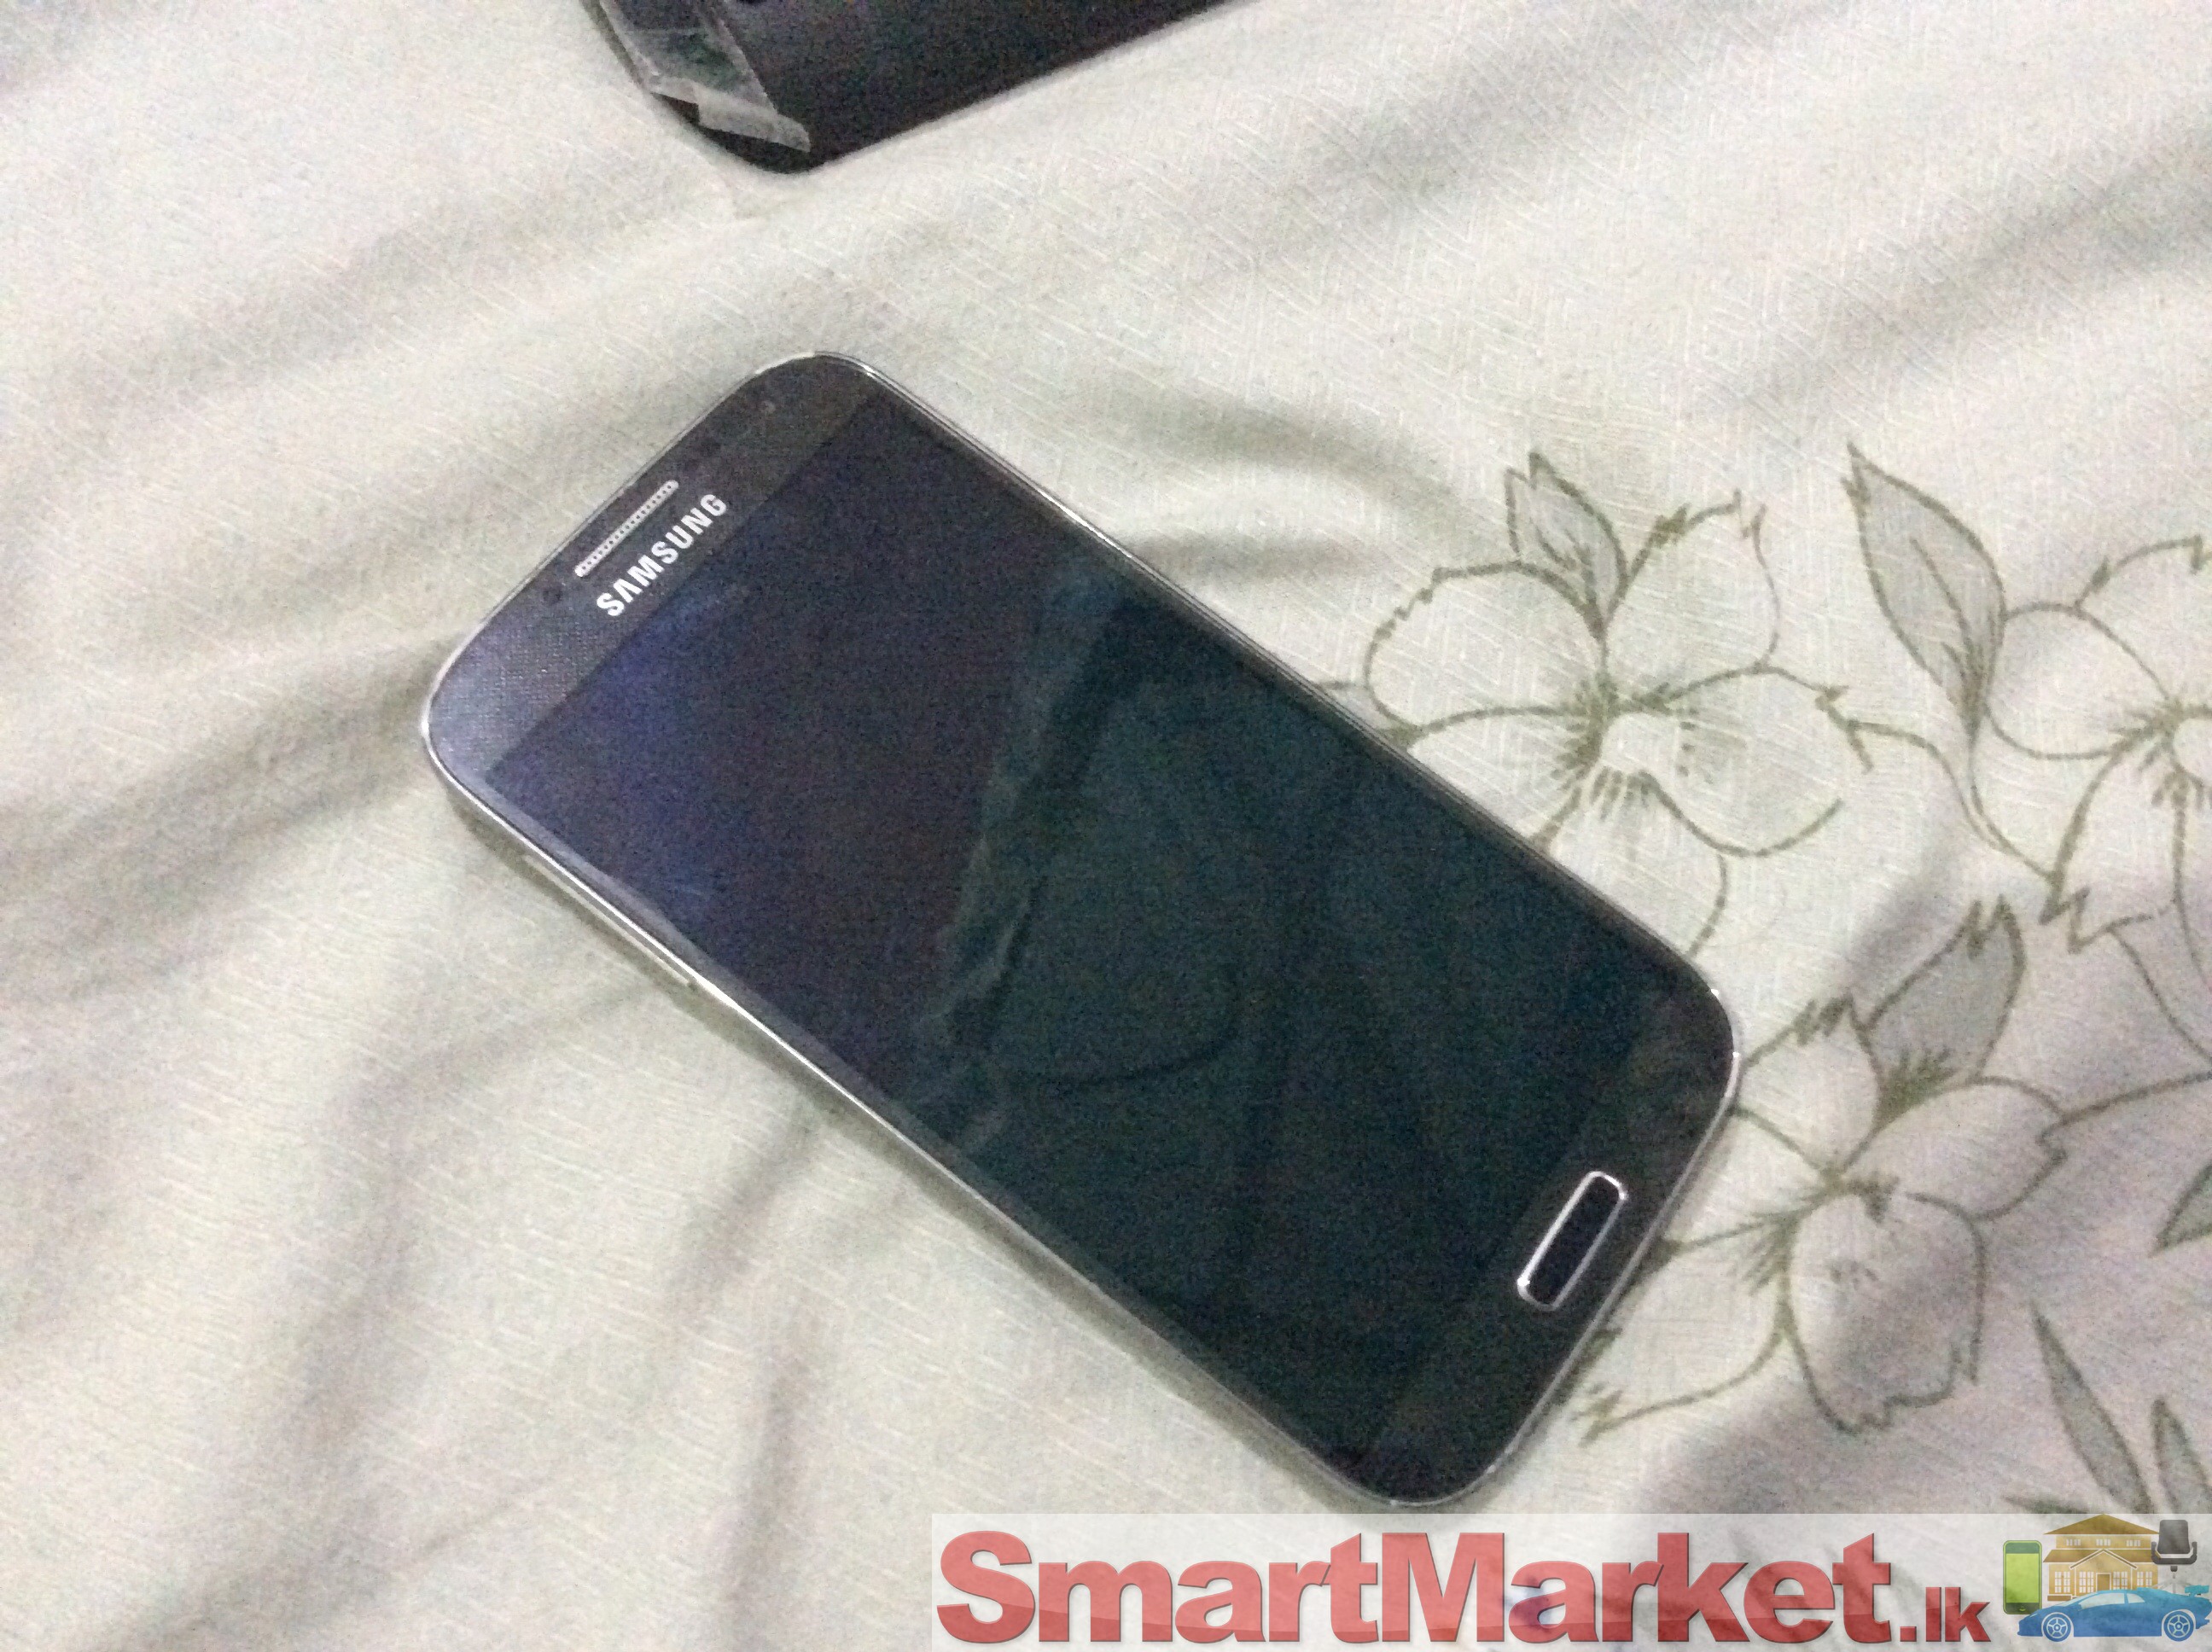 Samsung Galaxy S4 For Sale